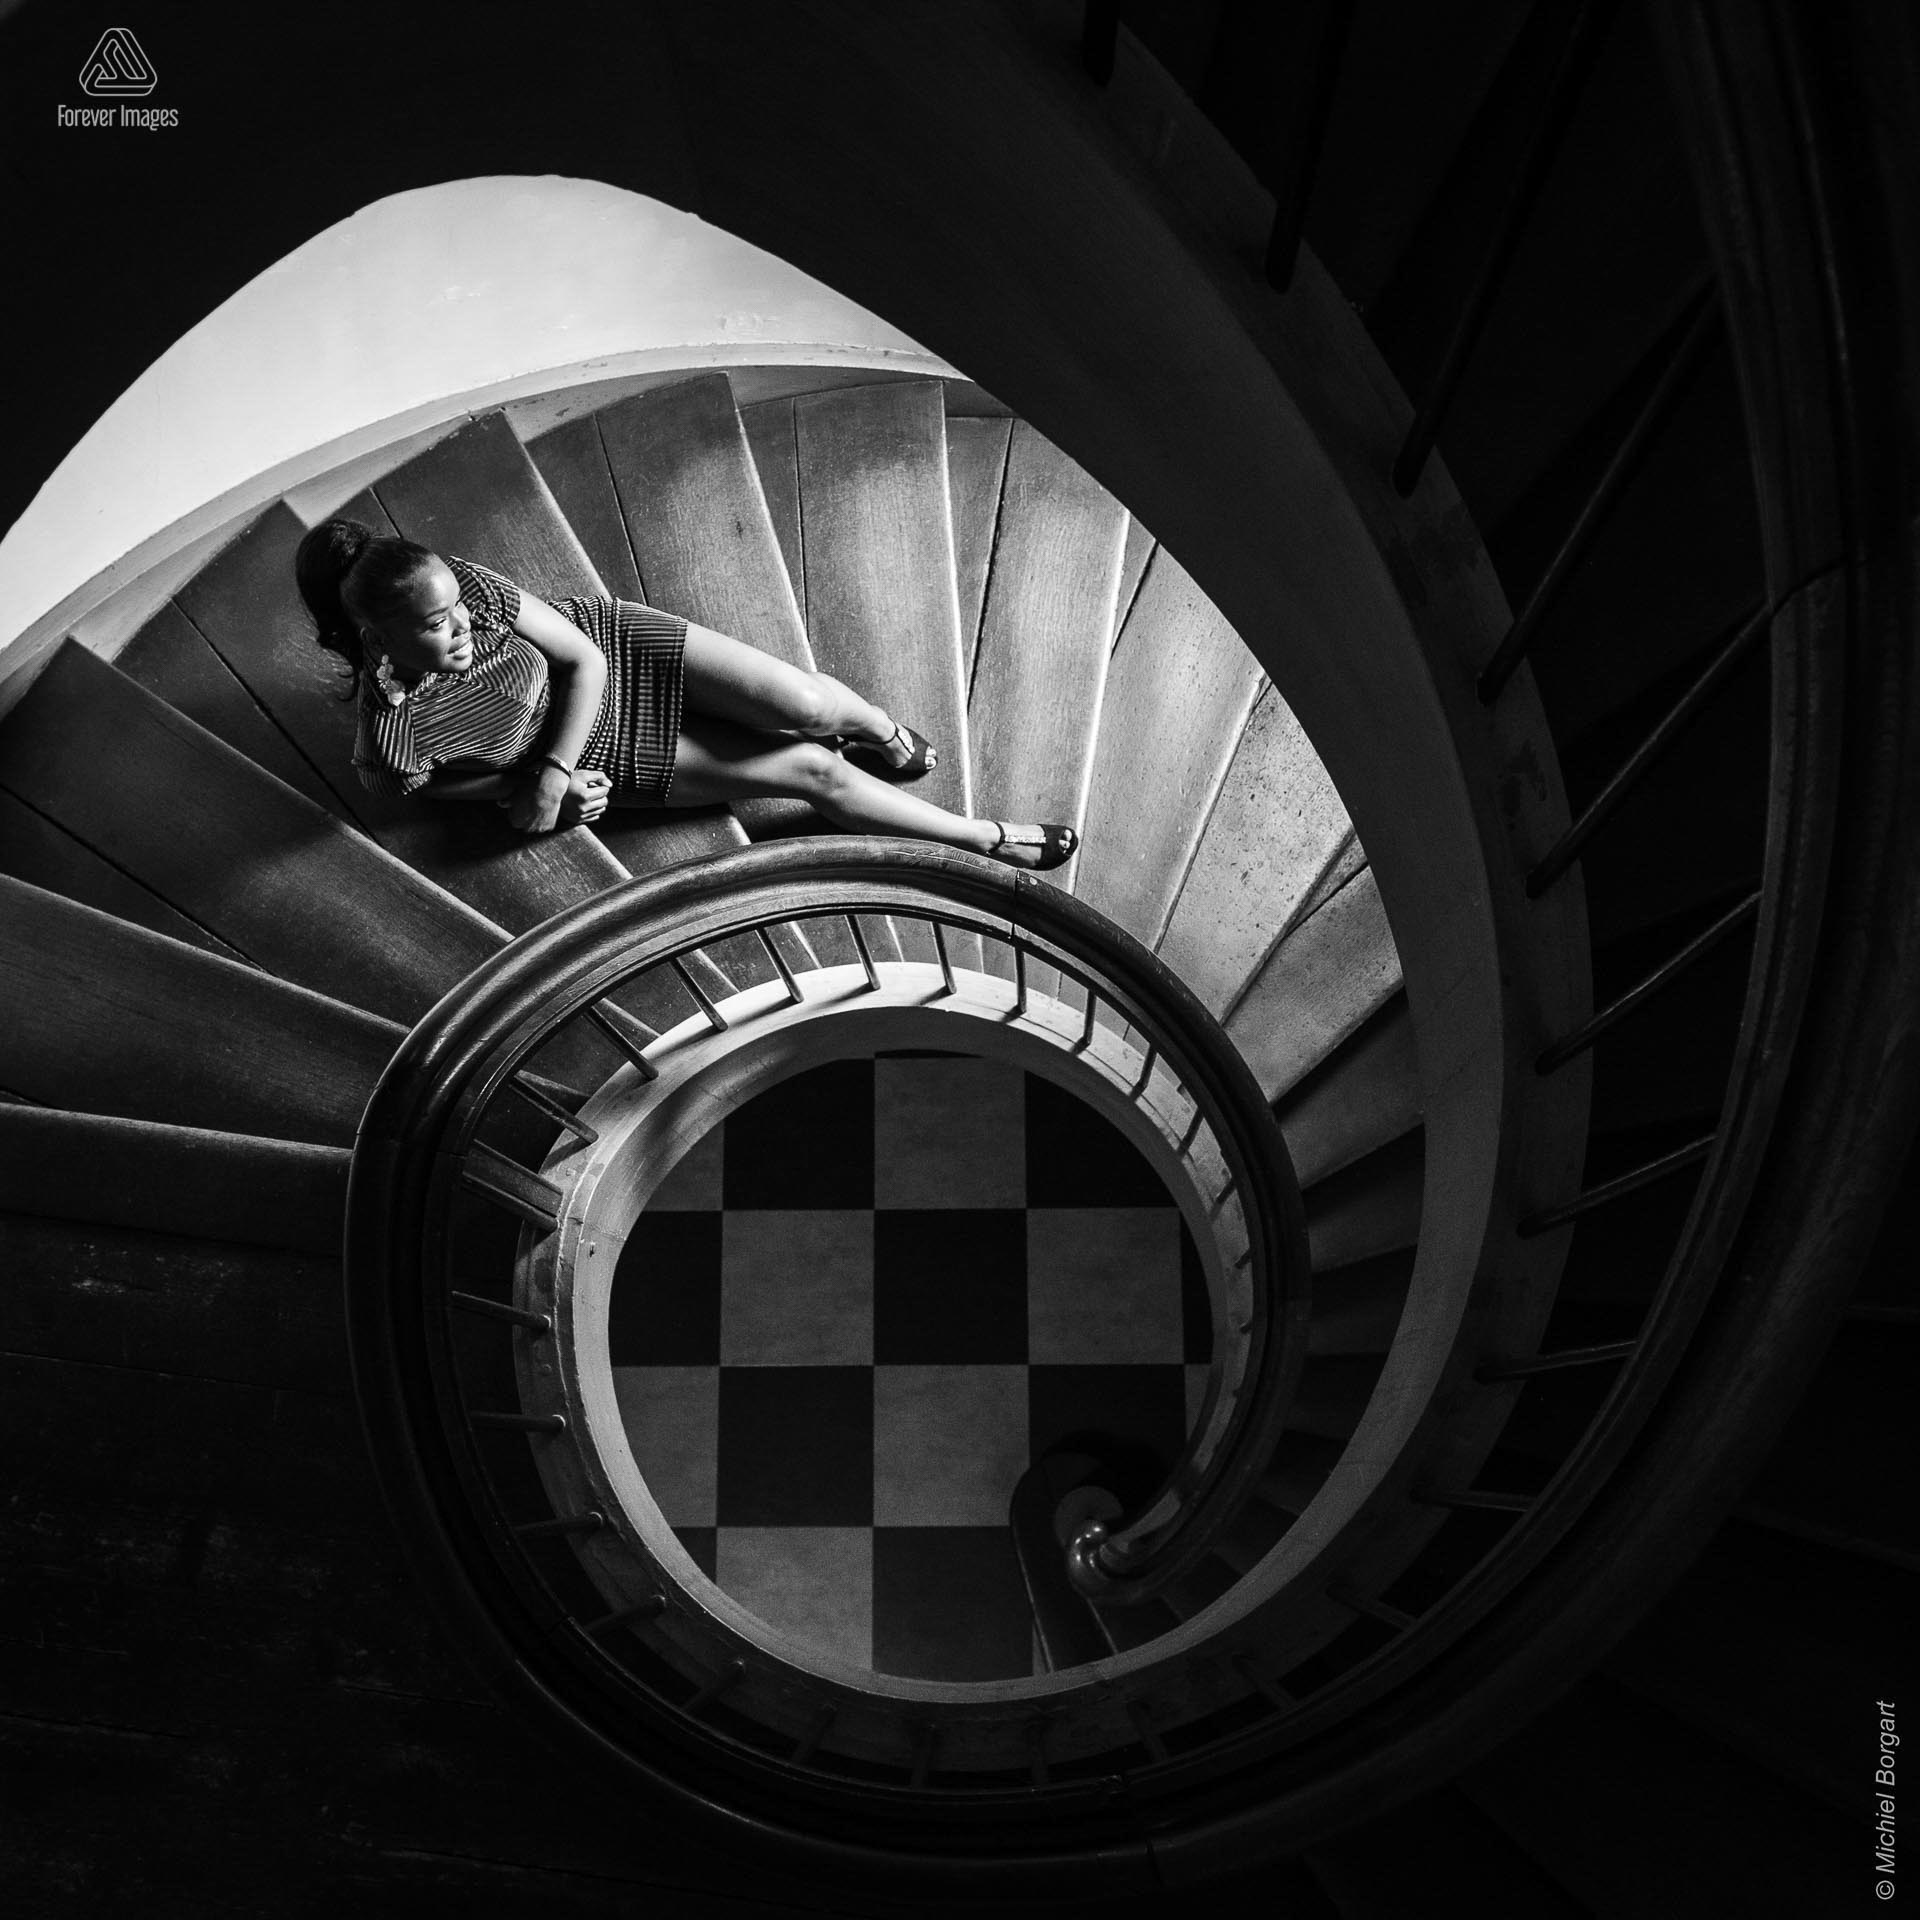 Portrait photo black and white B&W old spiral staircase | Mariangel Dolorita Koepelkerk Amsterdam | Portrait Photographer Michiel Borgart - Forever Images.